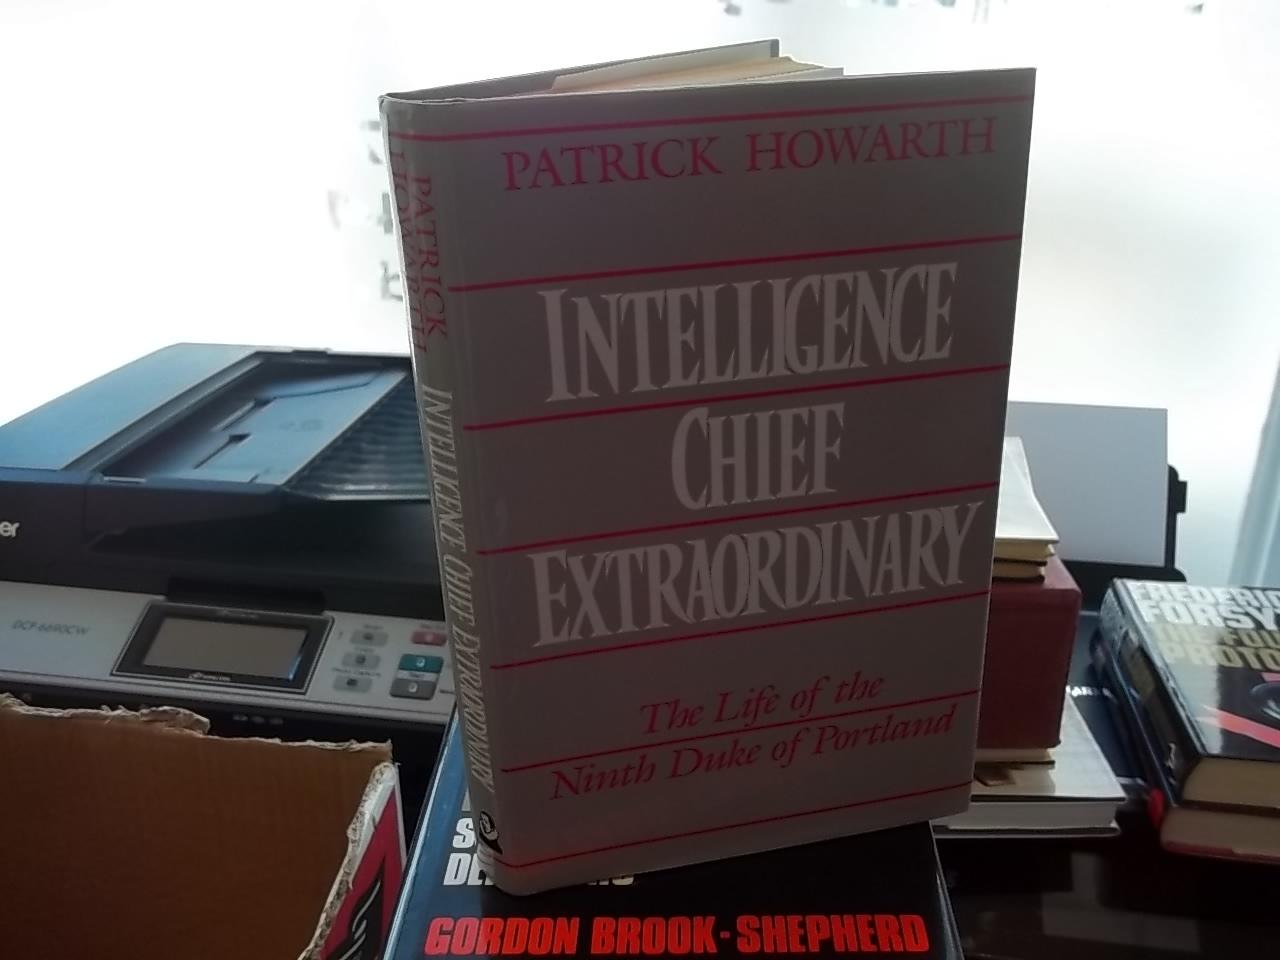 Intelligence Chief Extraordinary: The Life of the Ninth Duke of Portland - Howarth, Patrick